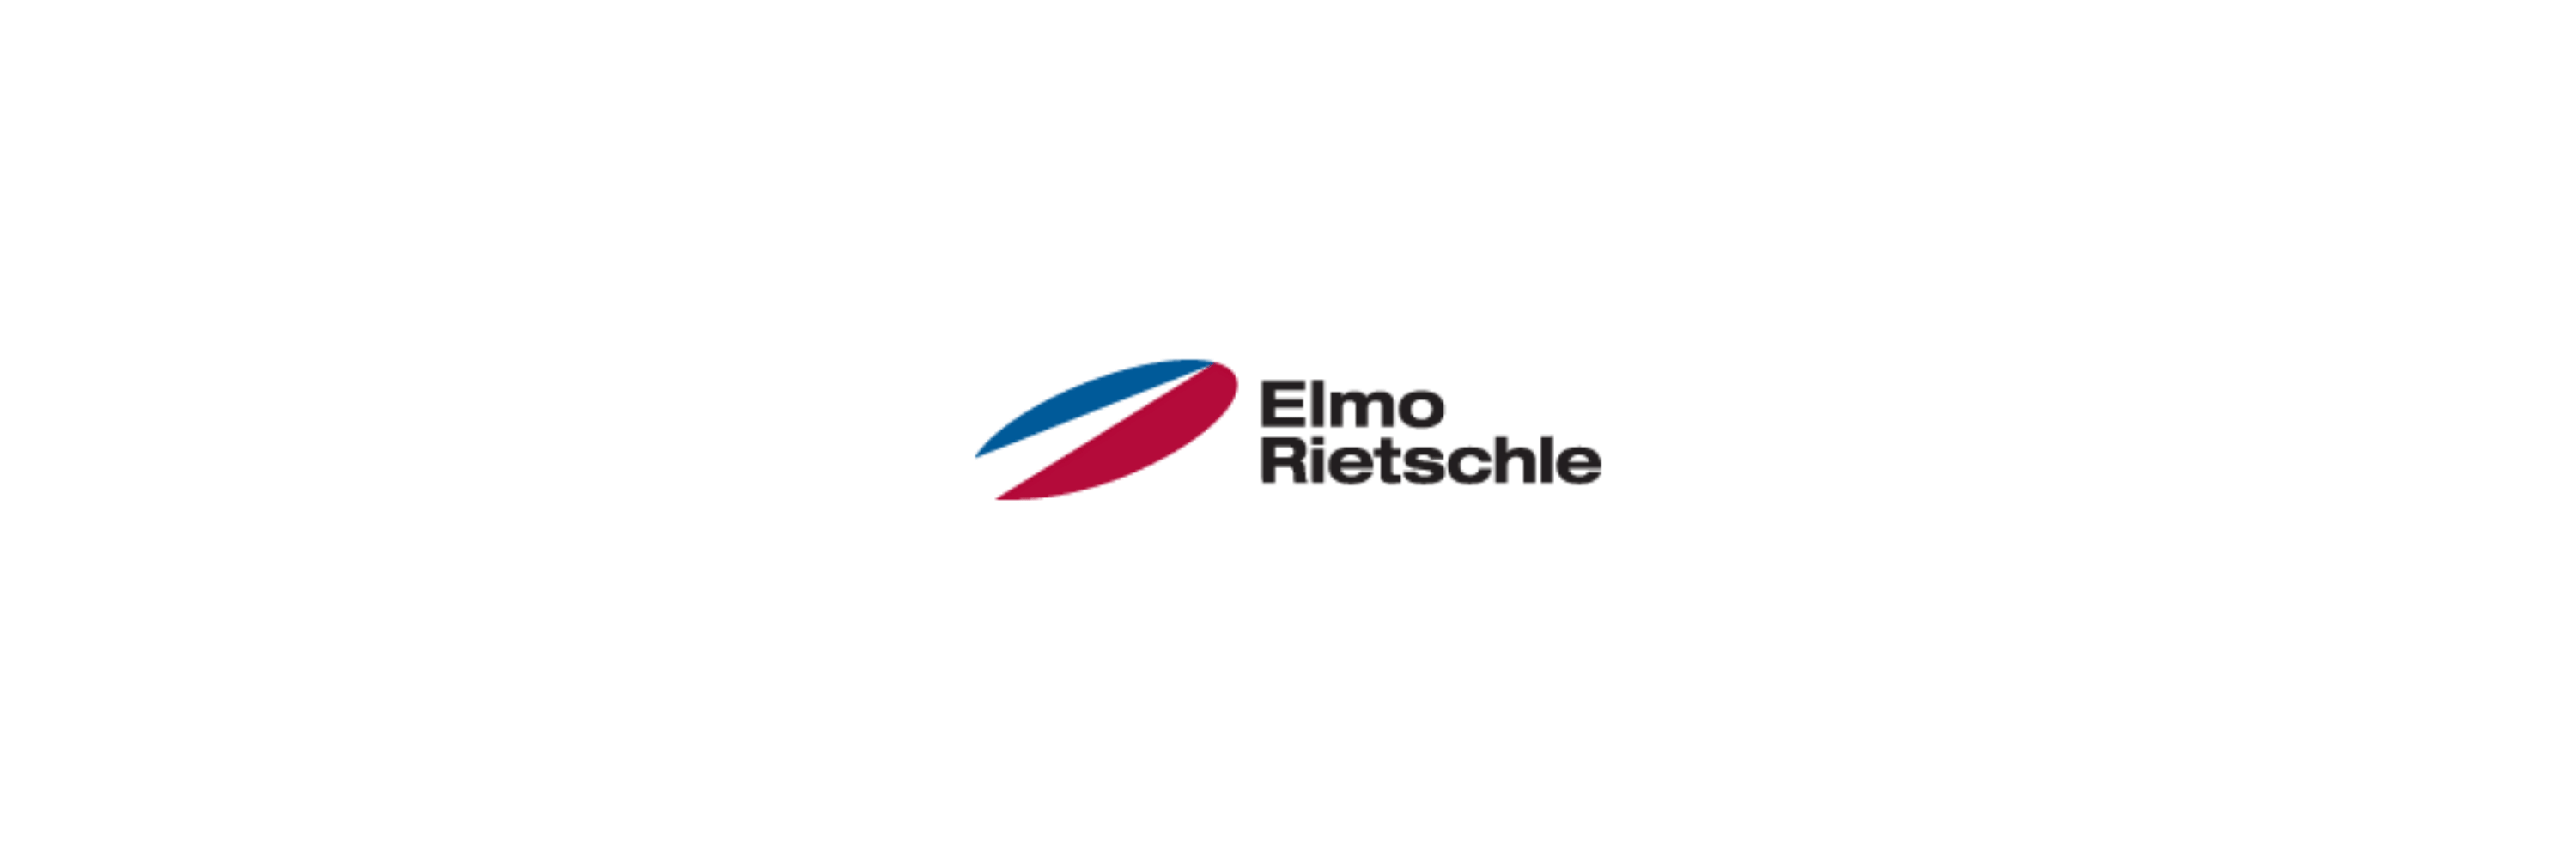 Elmo Rietschle - Klenk Maschinenhandel